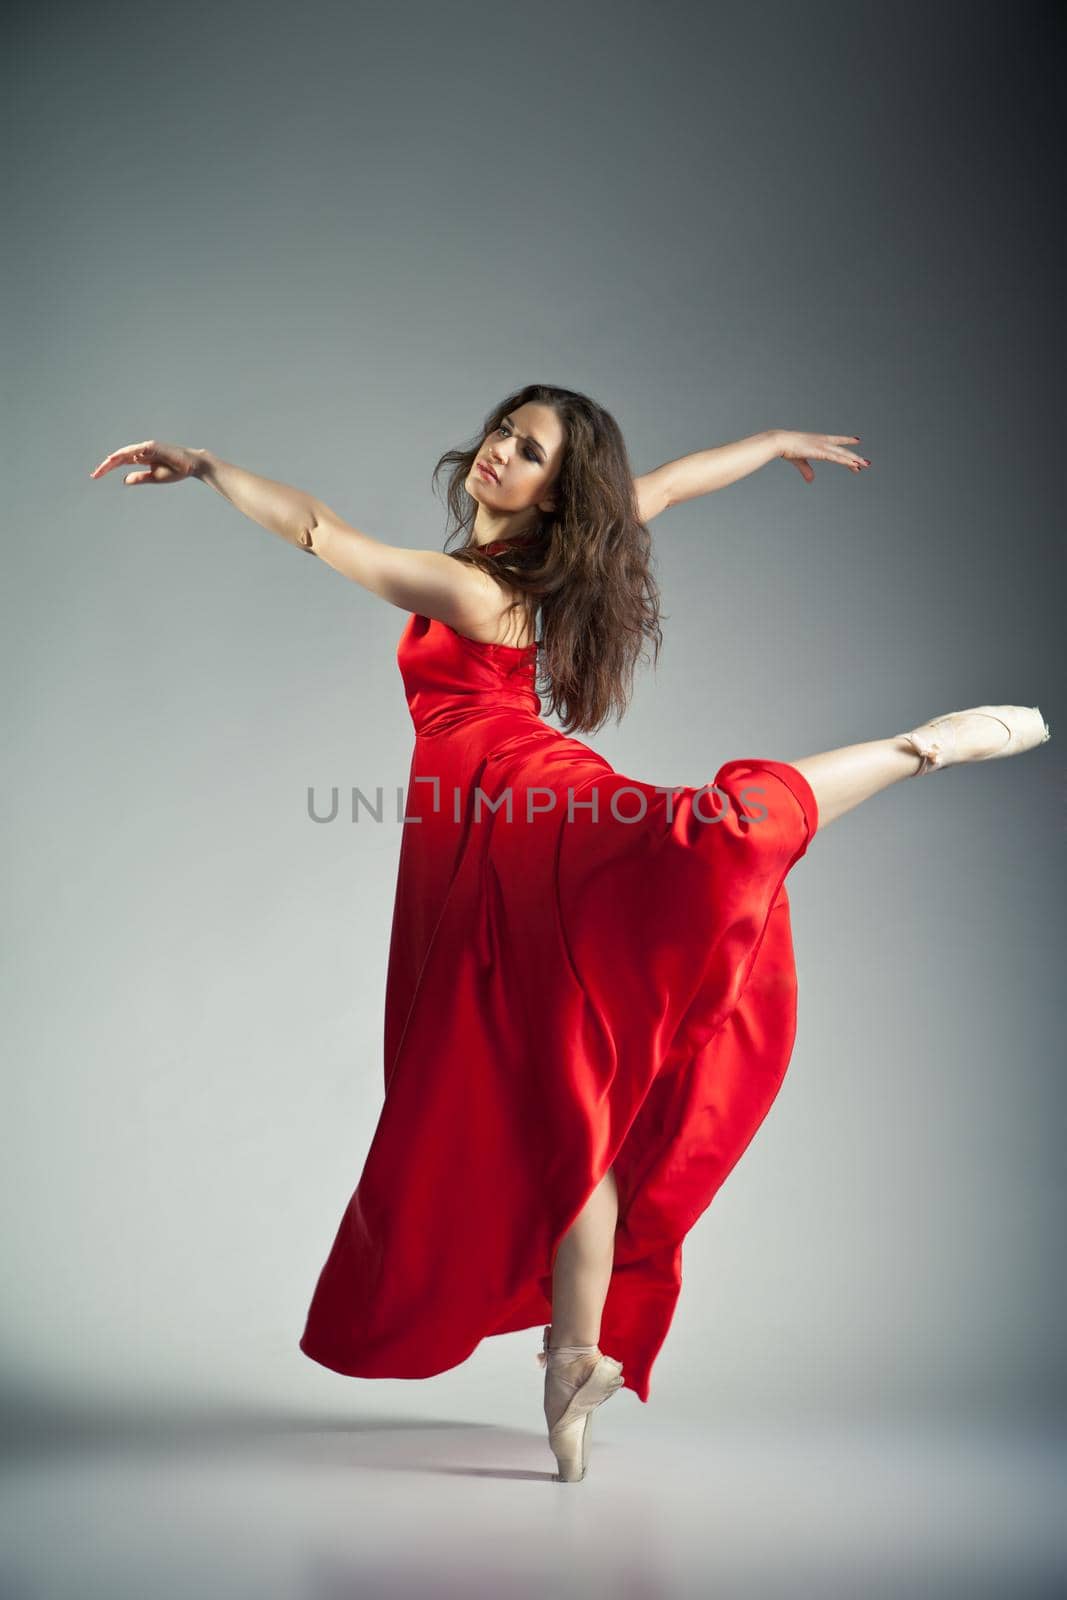 Ballet dancer wearing red dress over grey by Julenochek